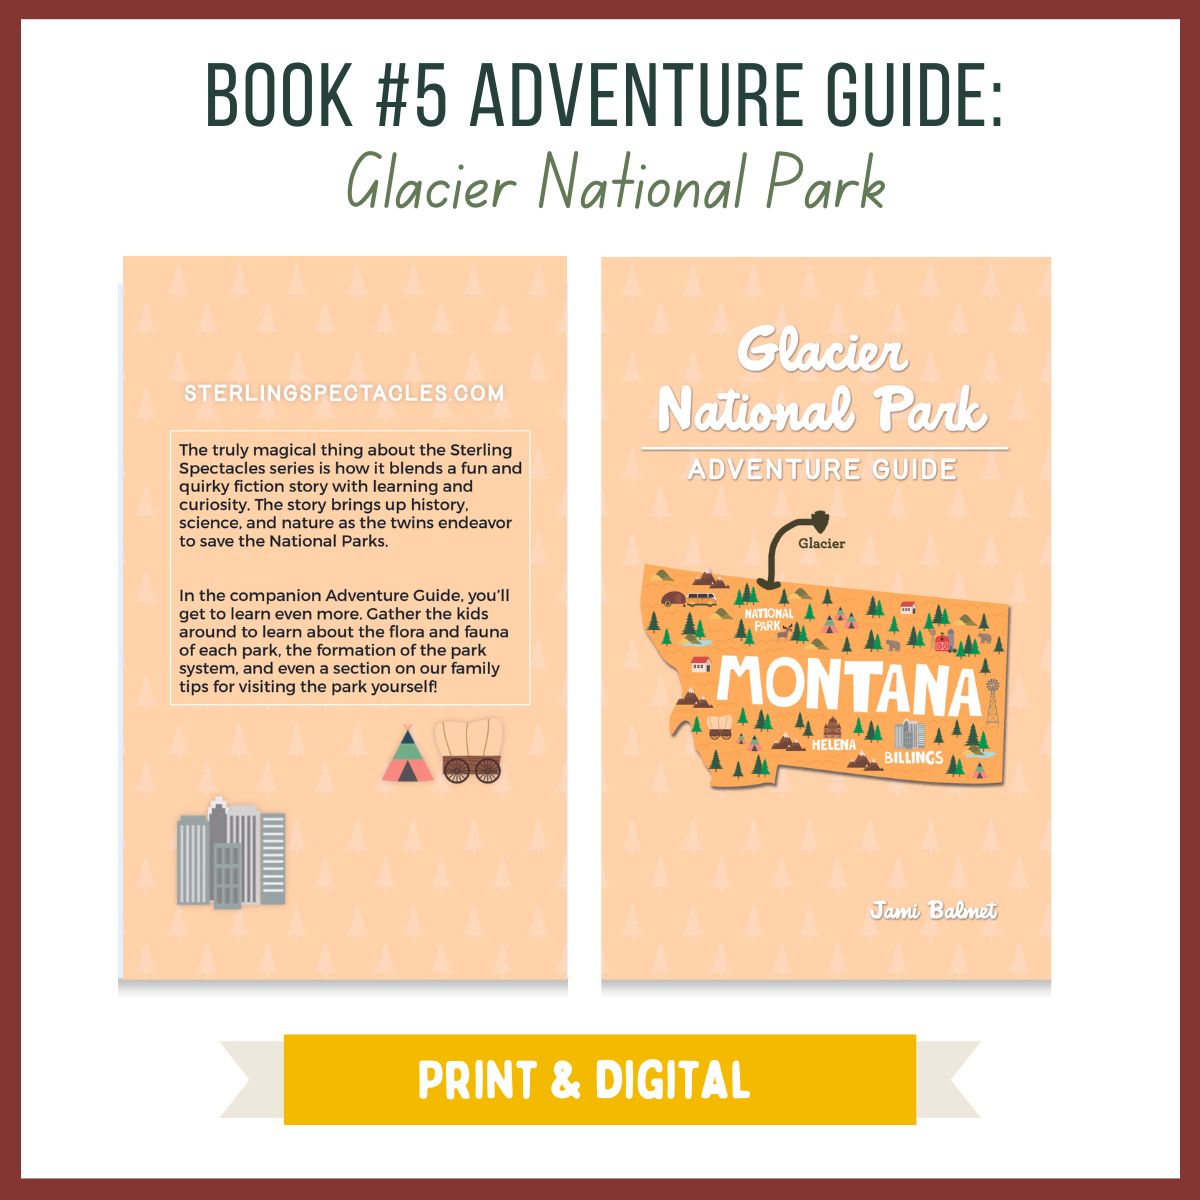 Book #5: Adventure Guide - PRINT